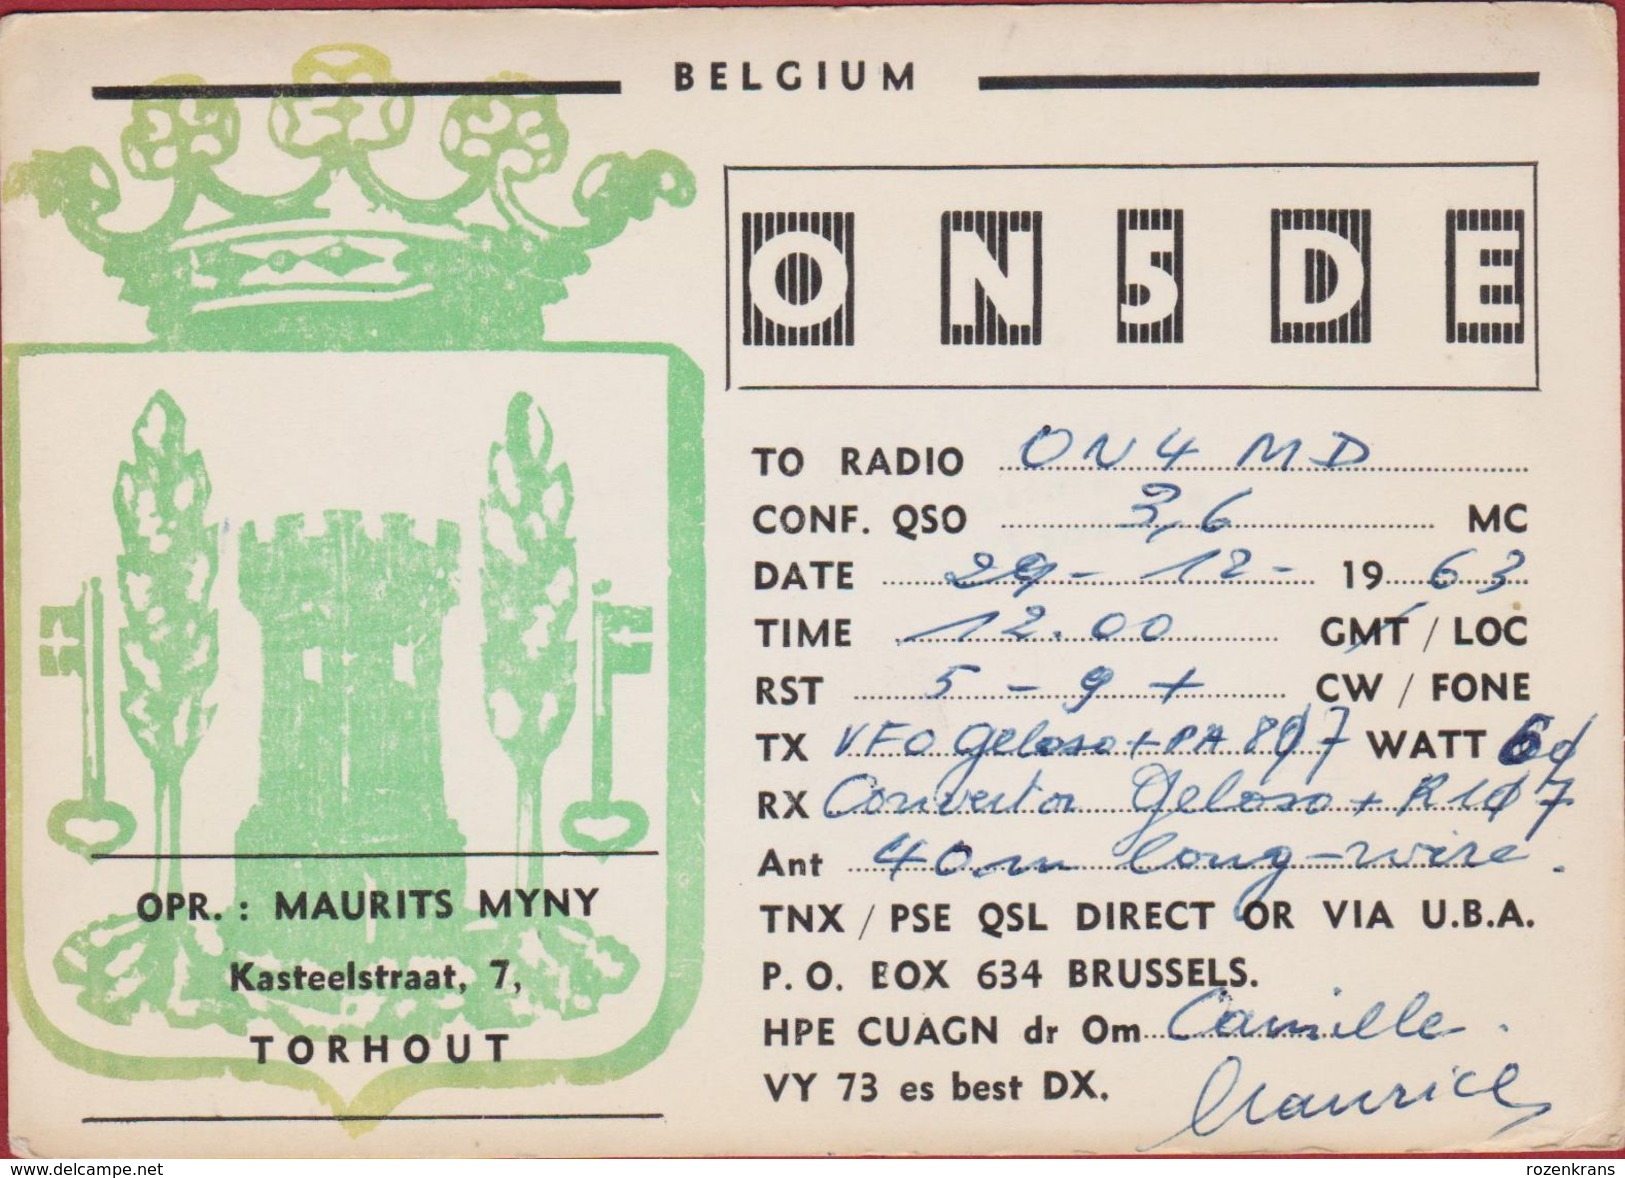 QSL Card Amateur Radio Station CB Belgian Belgium Torhout Maurits Myny QSO - Radio Amateur